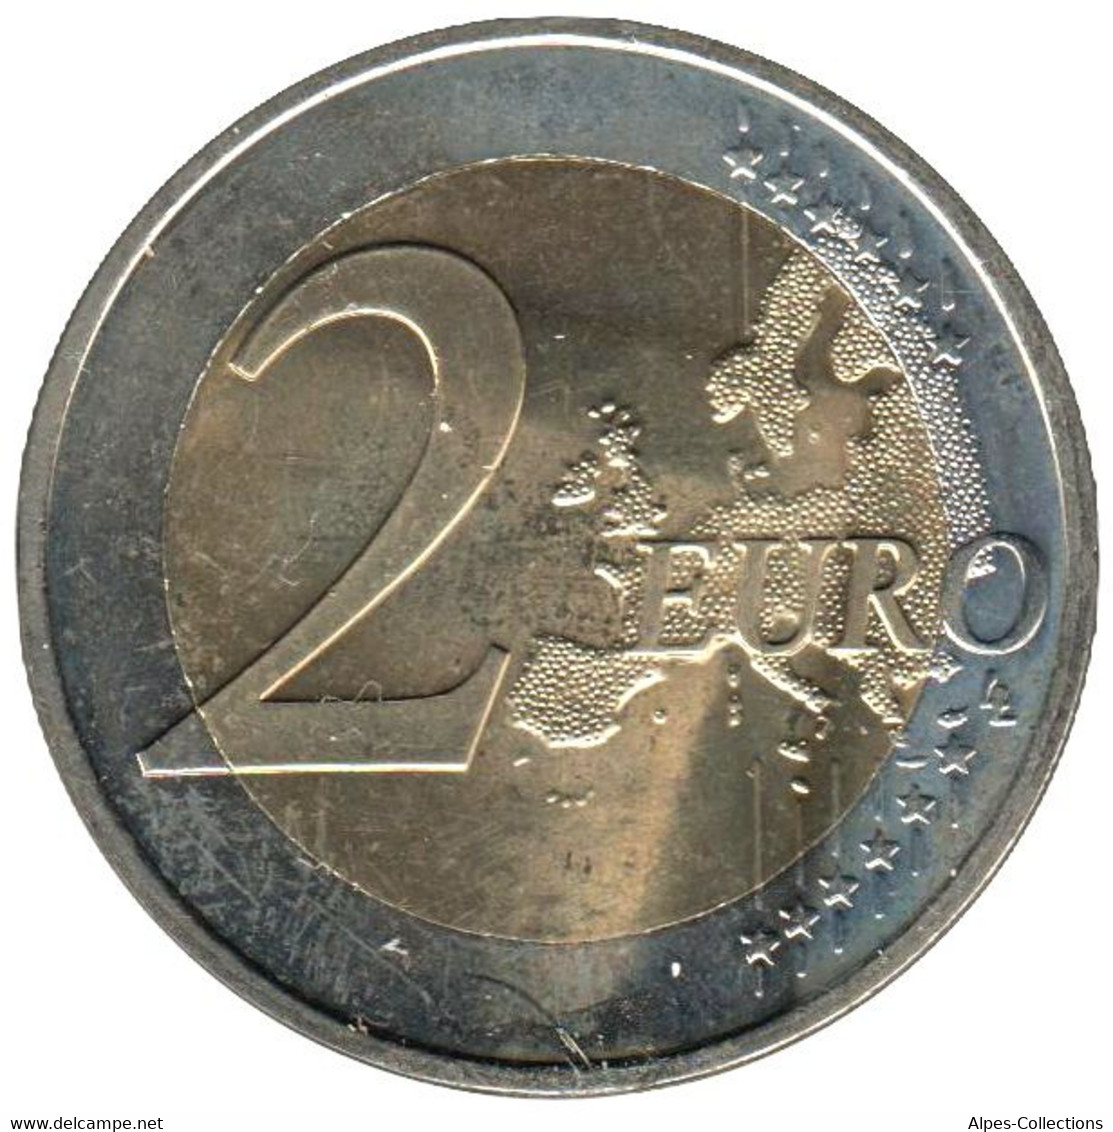 SQ20019.1 - SLOVAQUIE - 2 Euros Commémo. Milan Rastislav Stefanik - 2019 - Eslovaquia